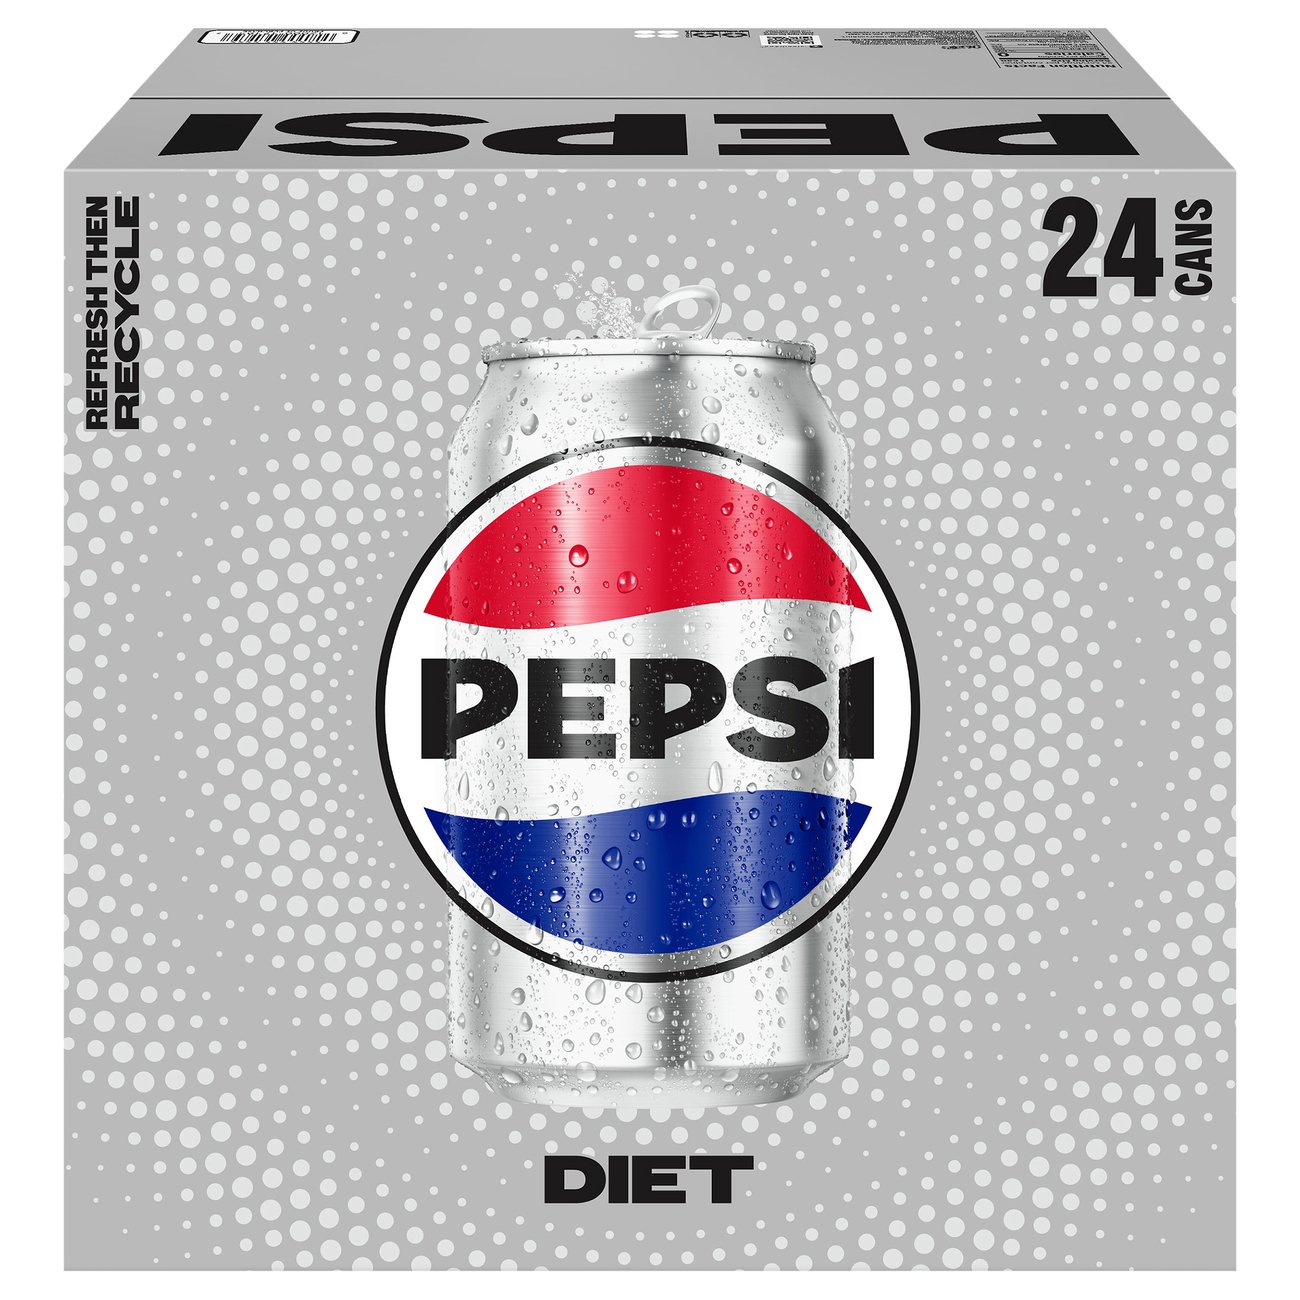 Pepsi pk Soda Diet 24 at Cola Cans - H-E-B Shop